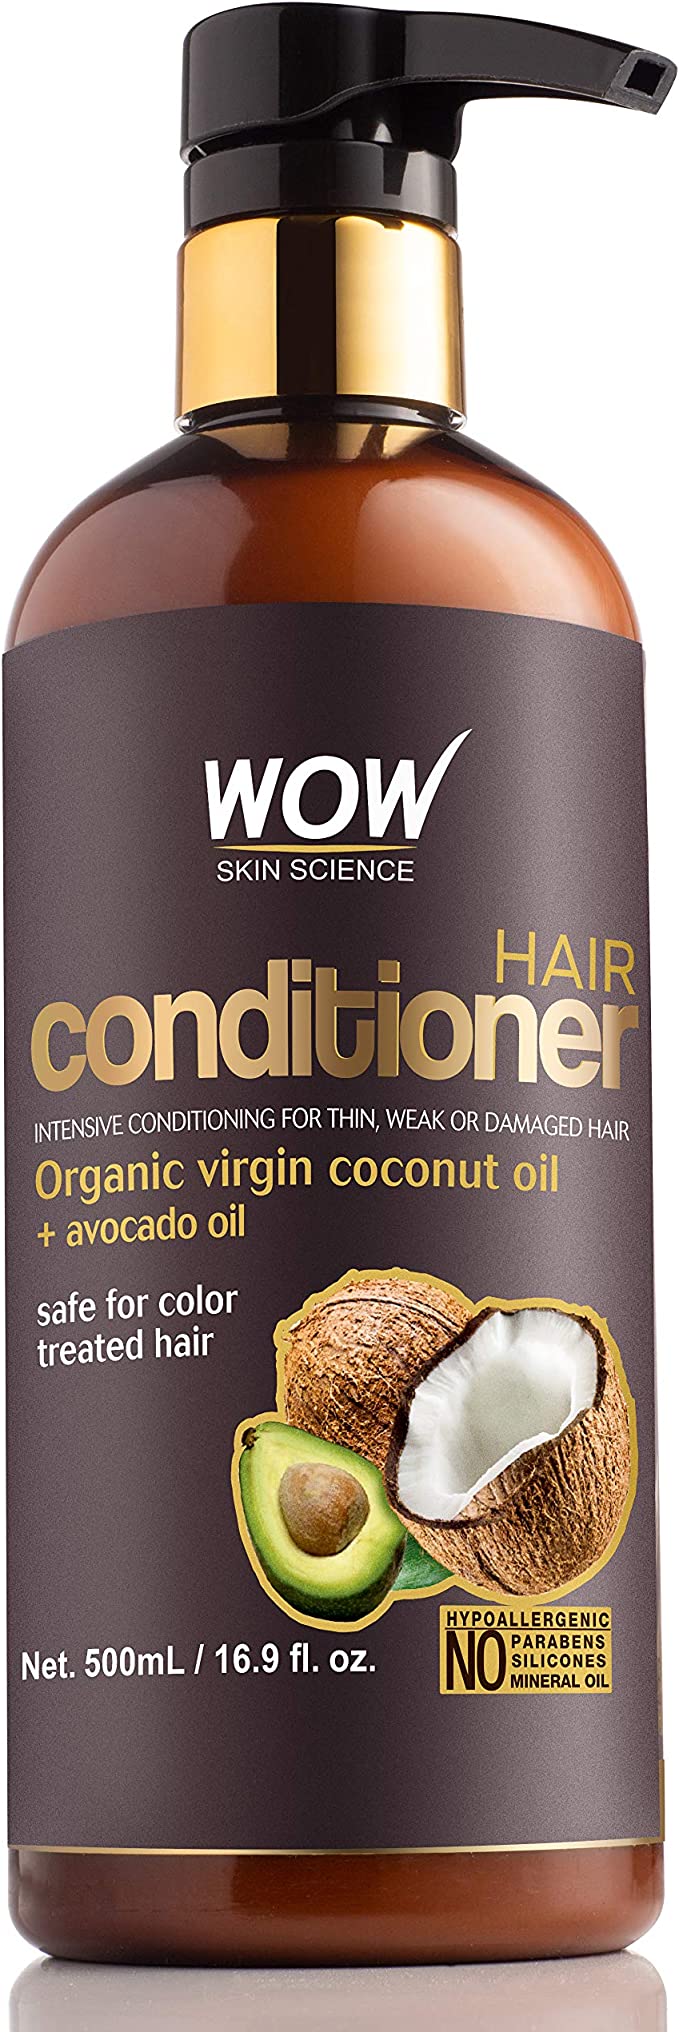 WOW Conditioner Hair Organic Virgin Coconut Oil 500ml